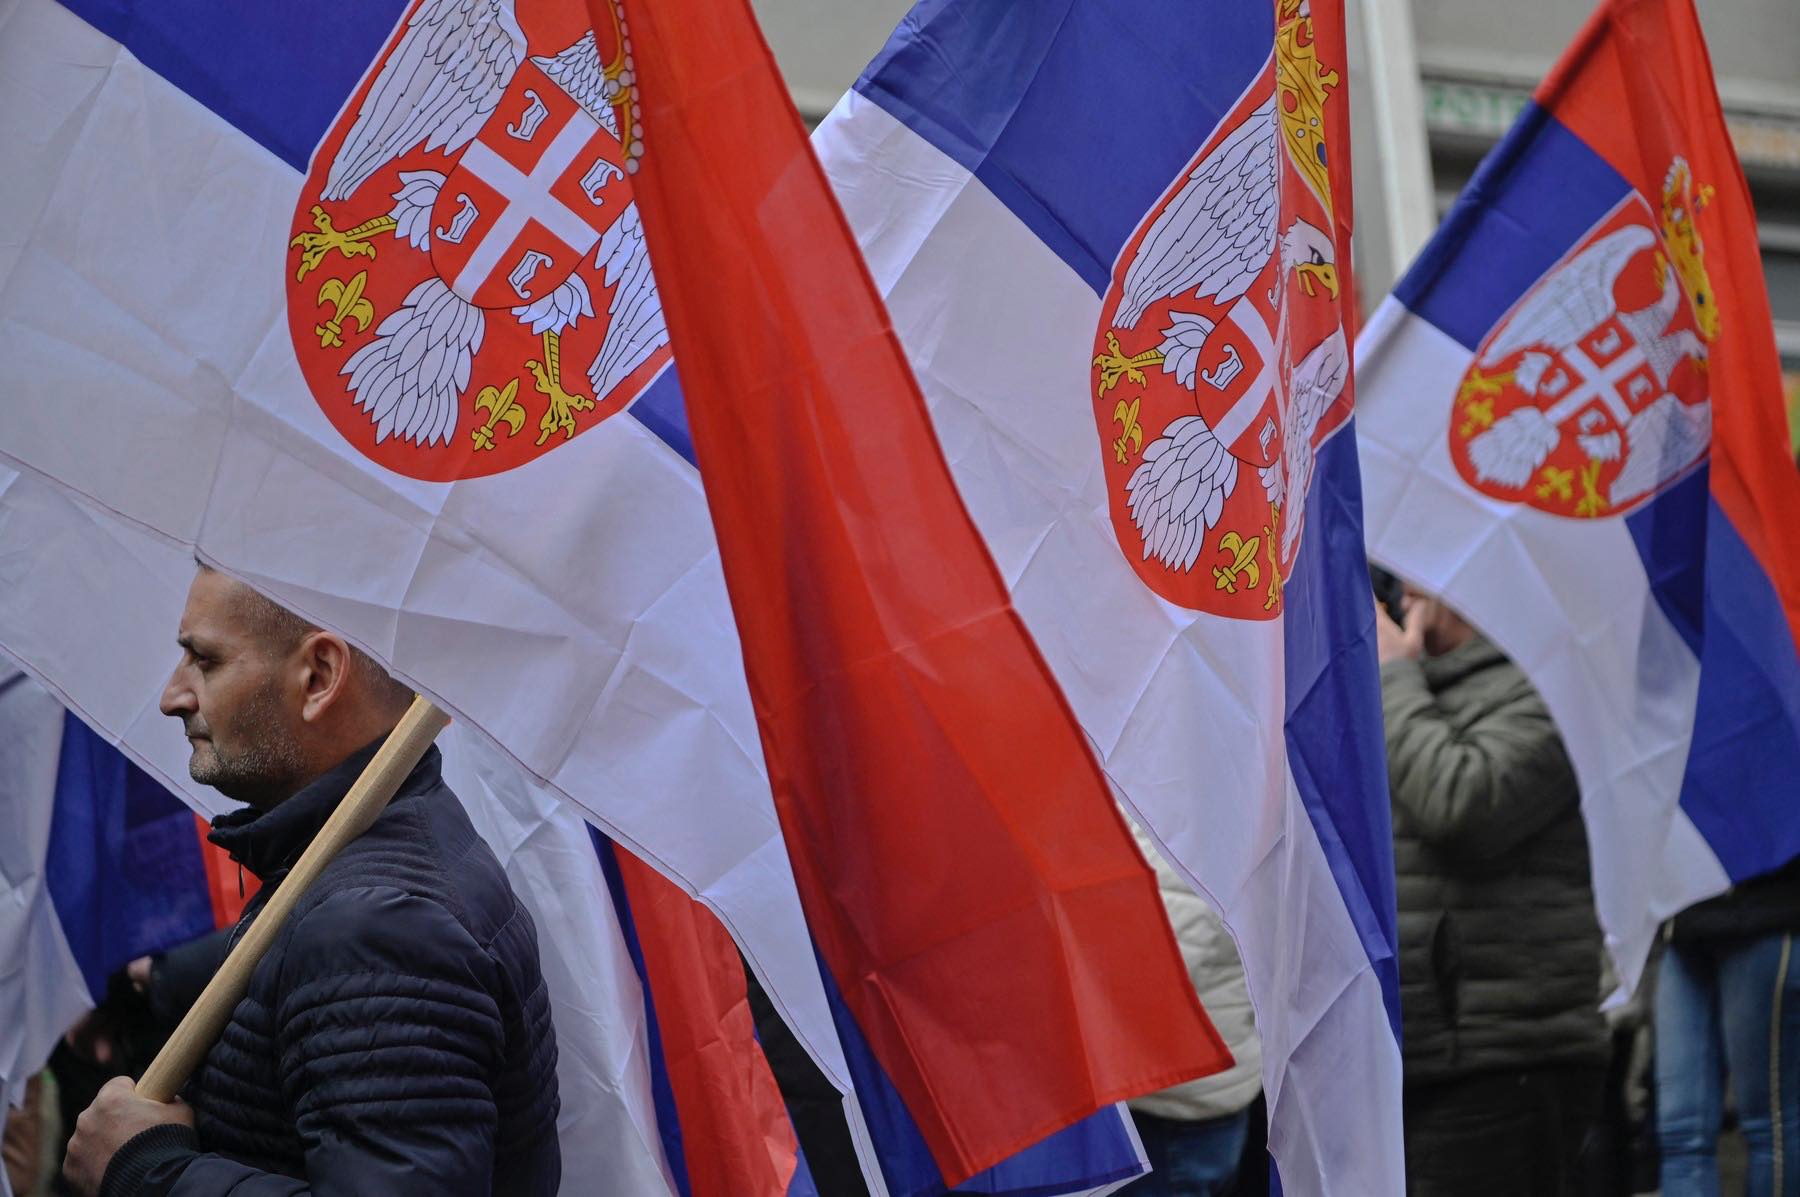 Zastava Srbije/ Serbian flag